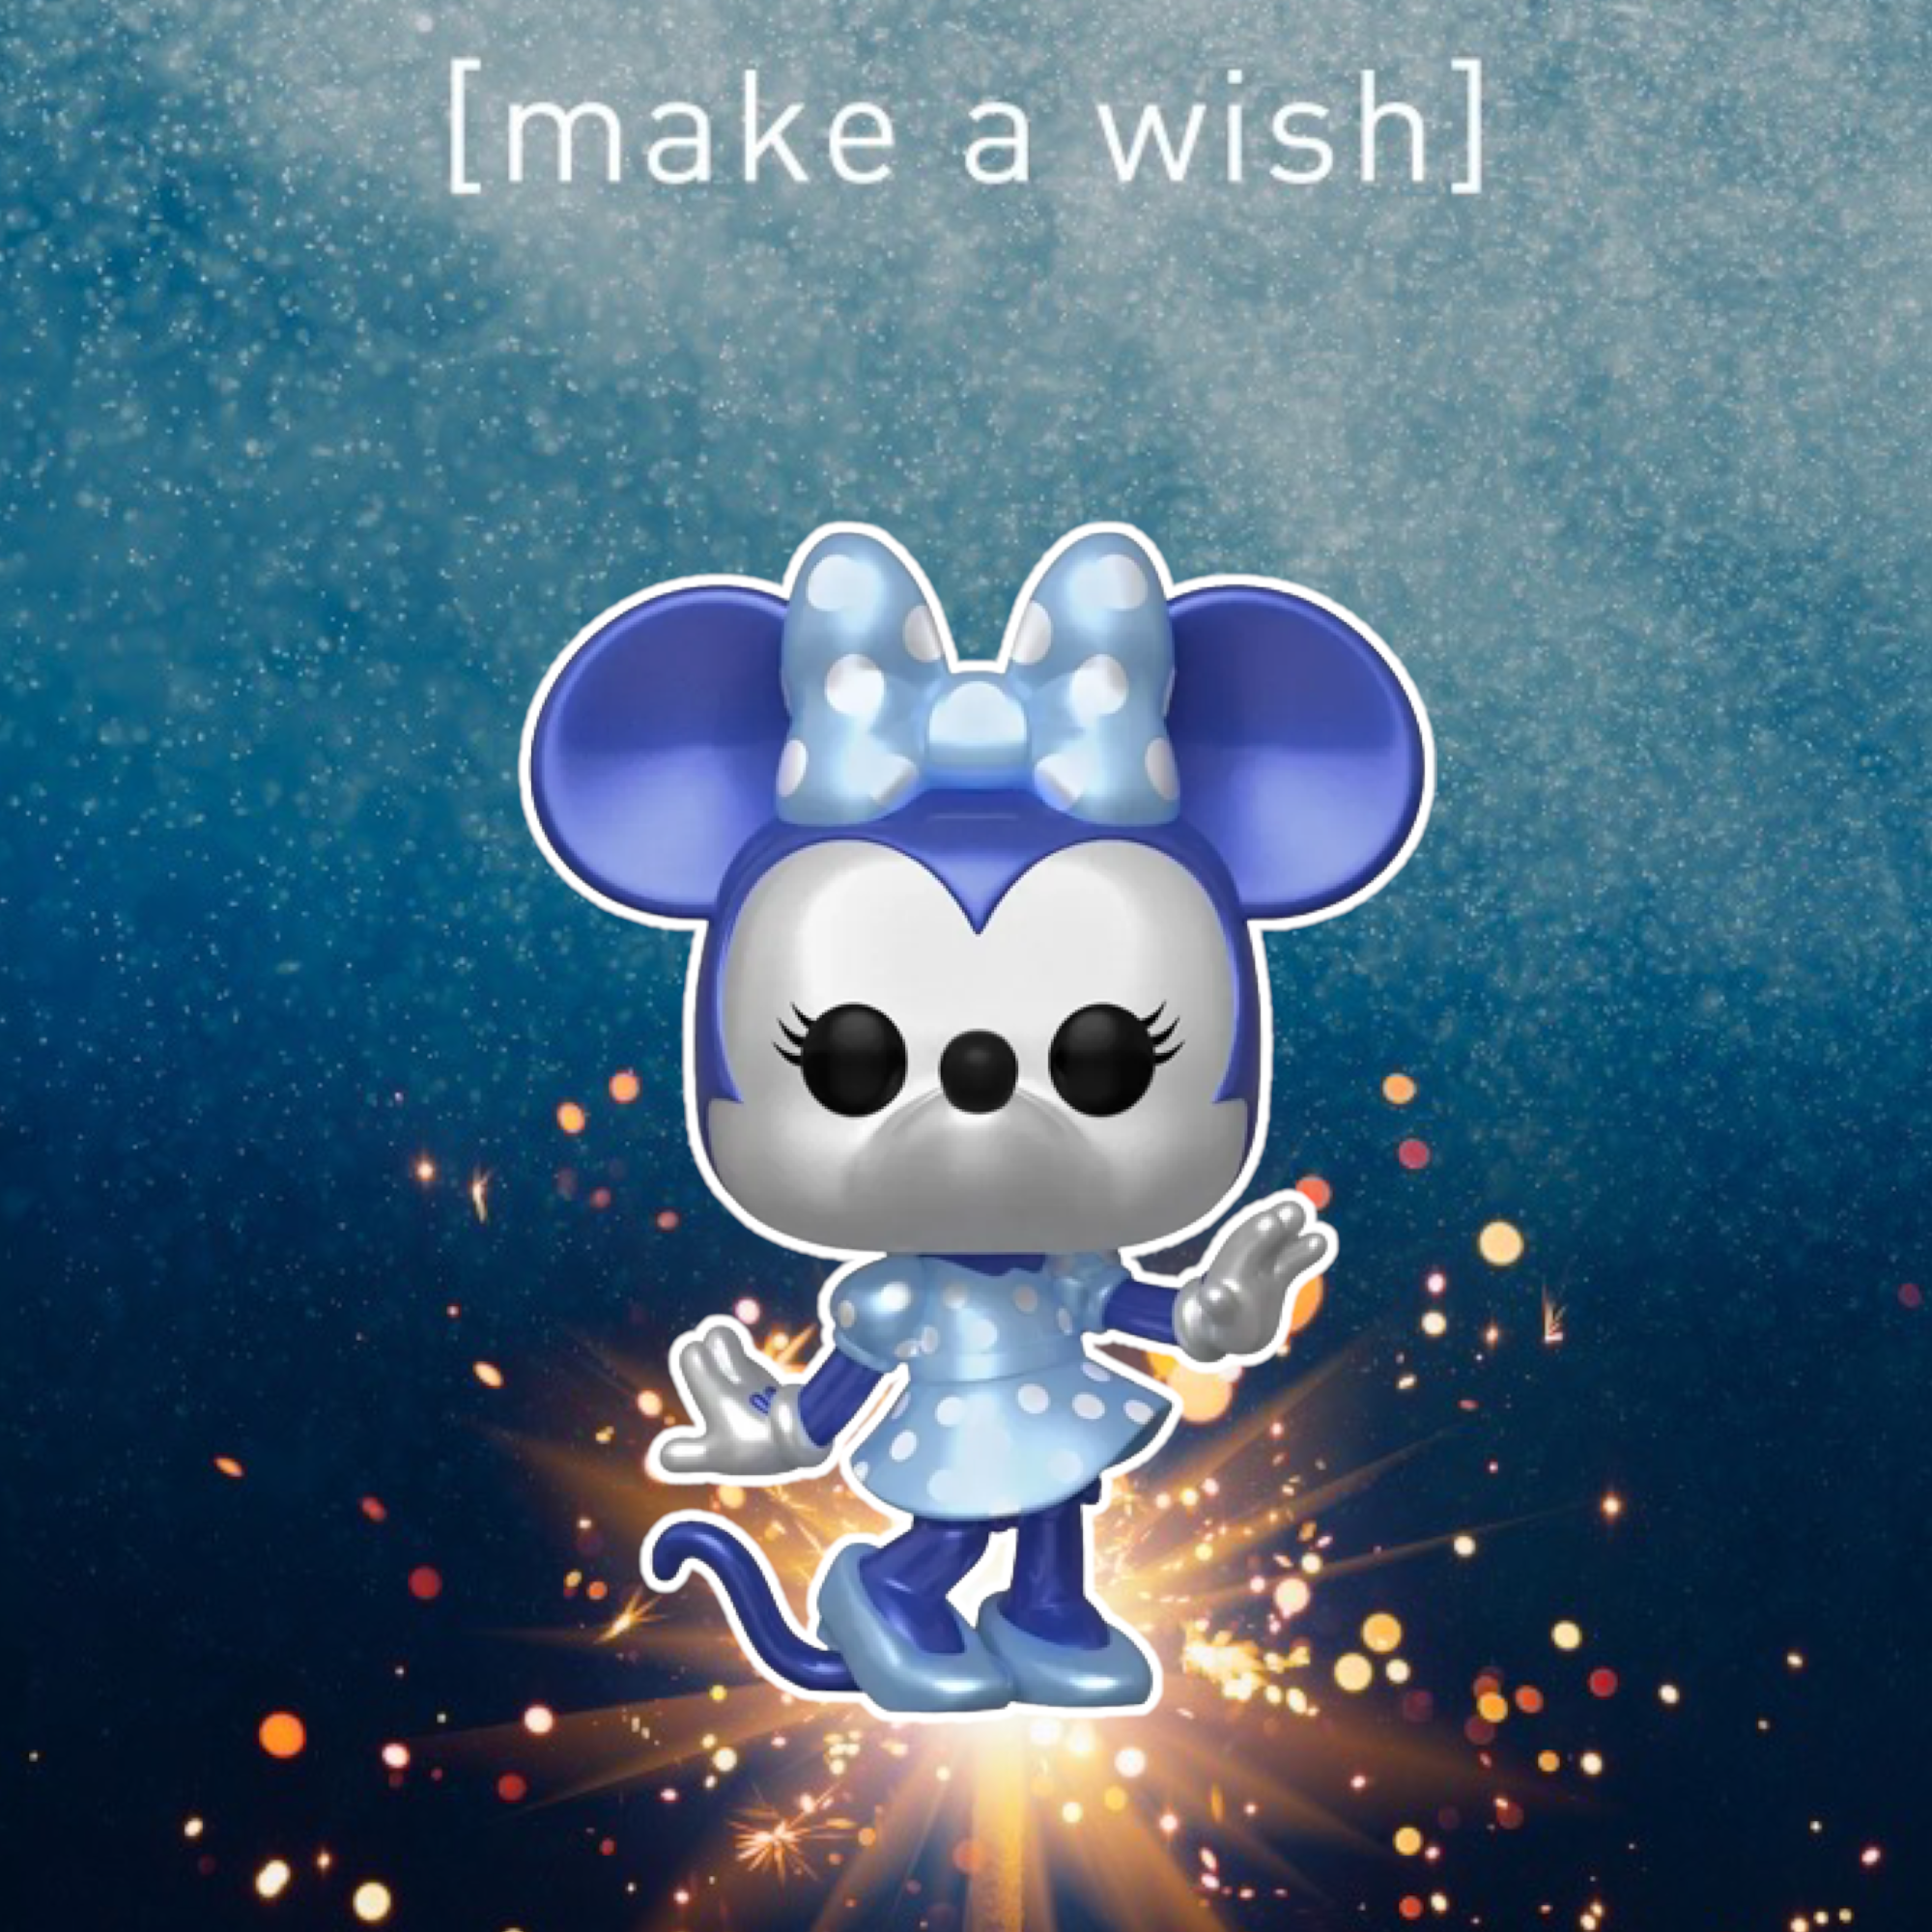 Disney - Funko Pop Bobble Head SE : Minnie Mouse MT